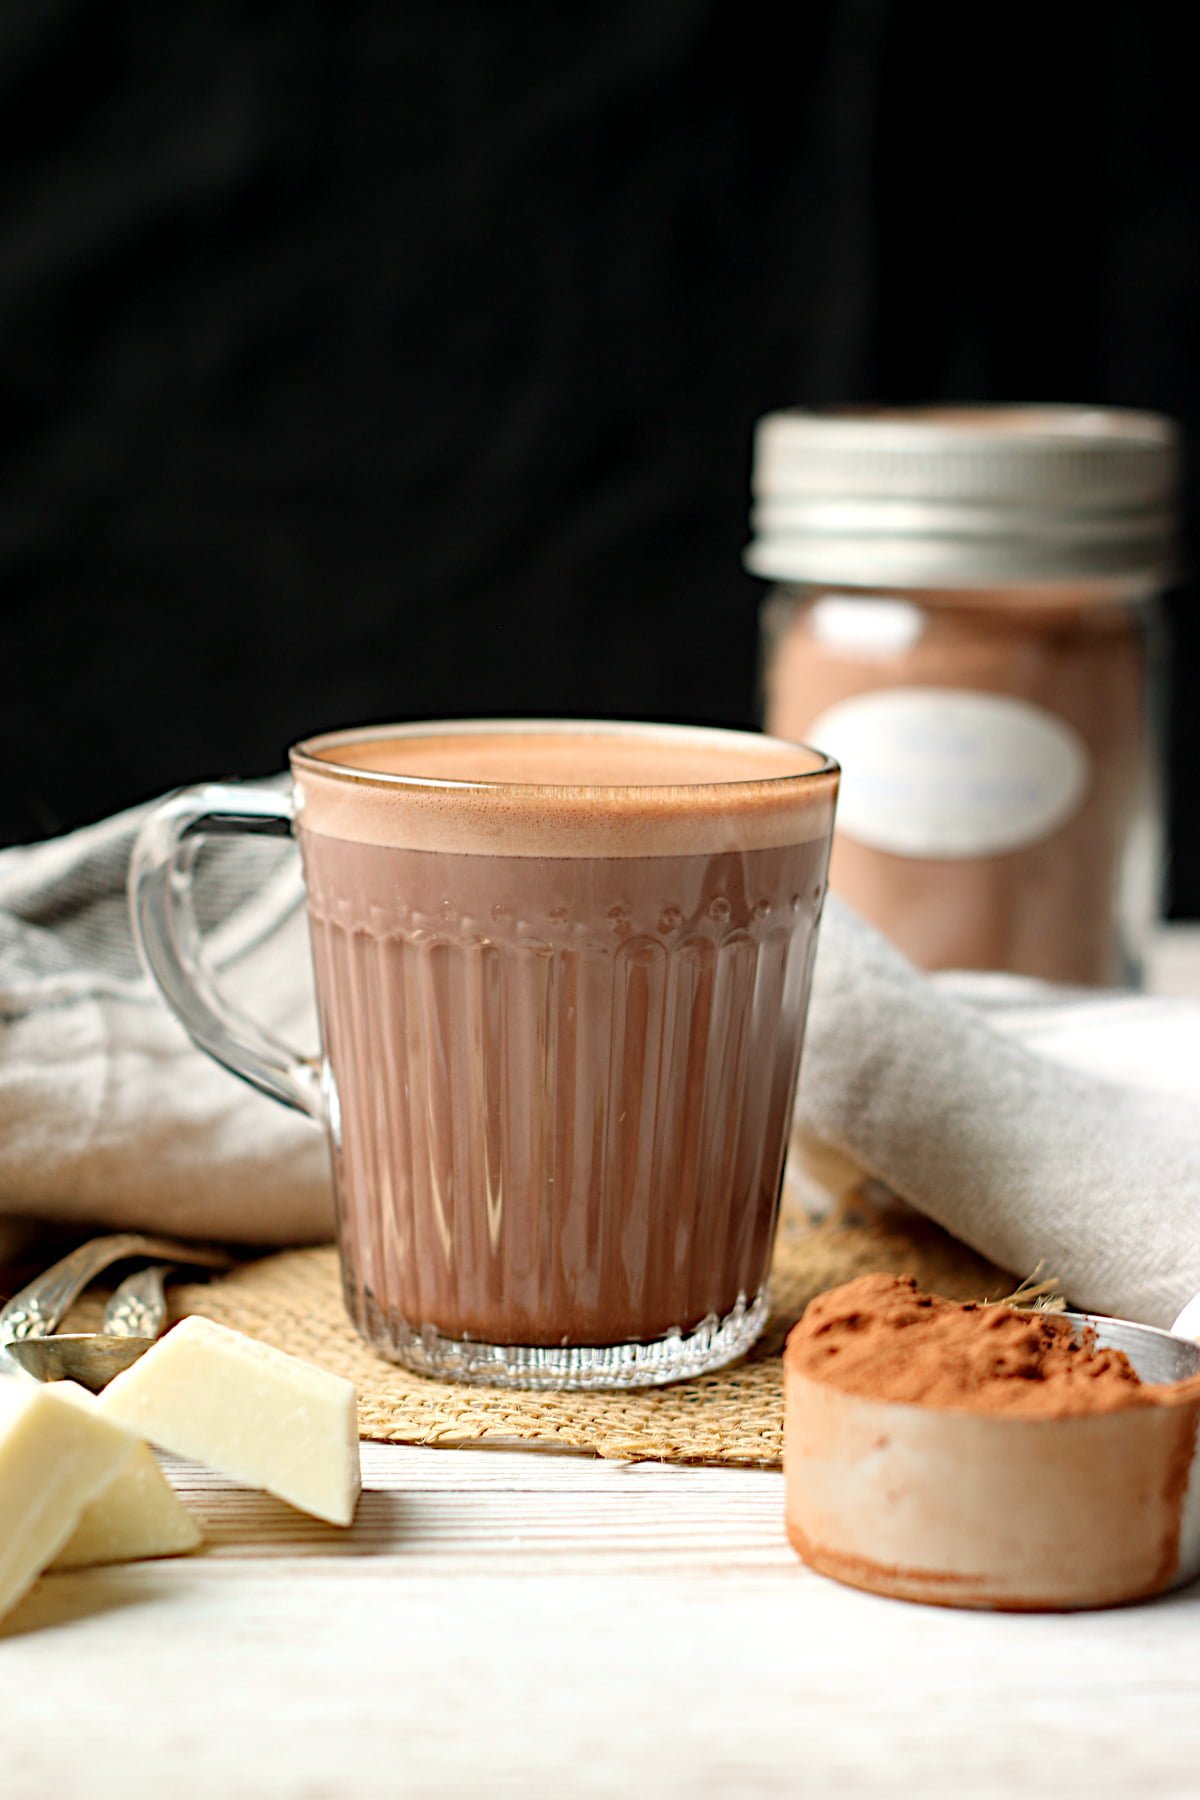 Homemade Hot Chocolate in a clear glass mug.